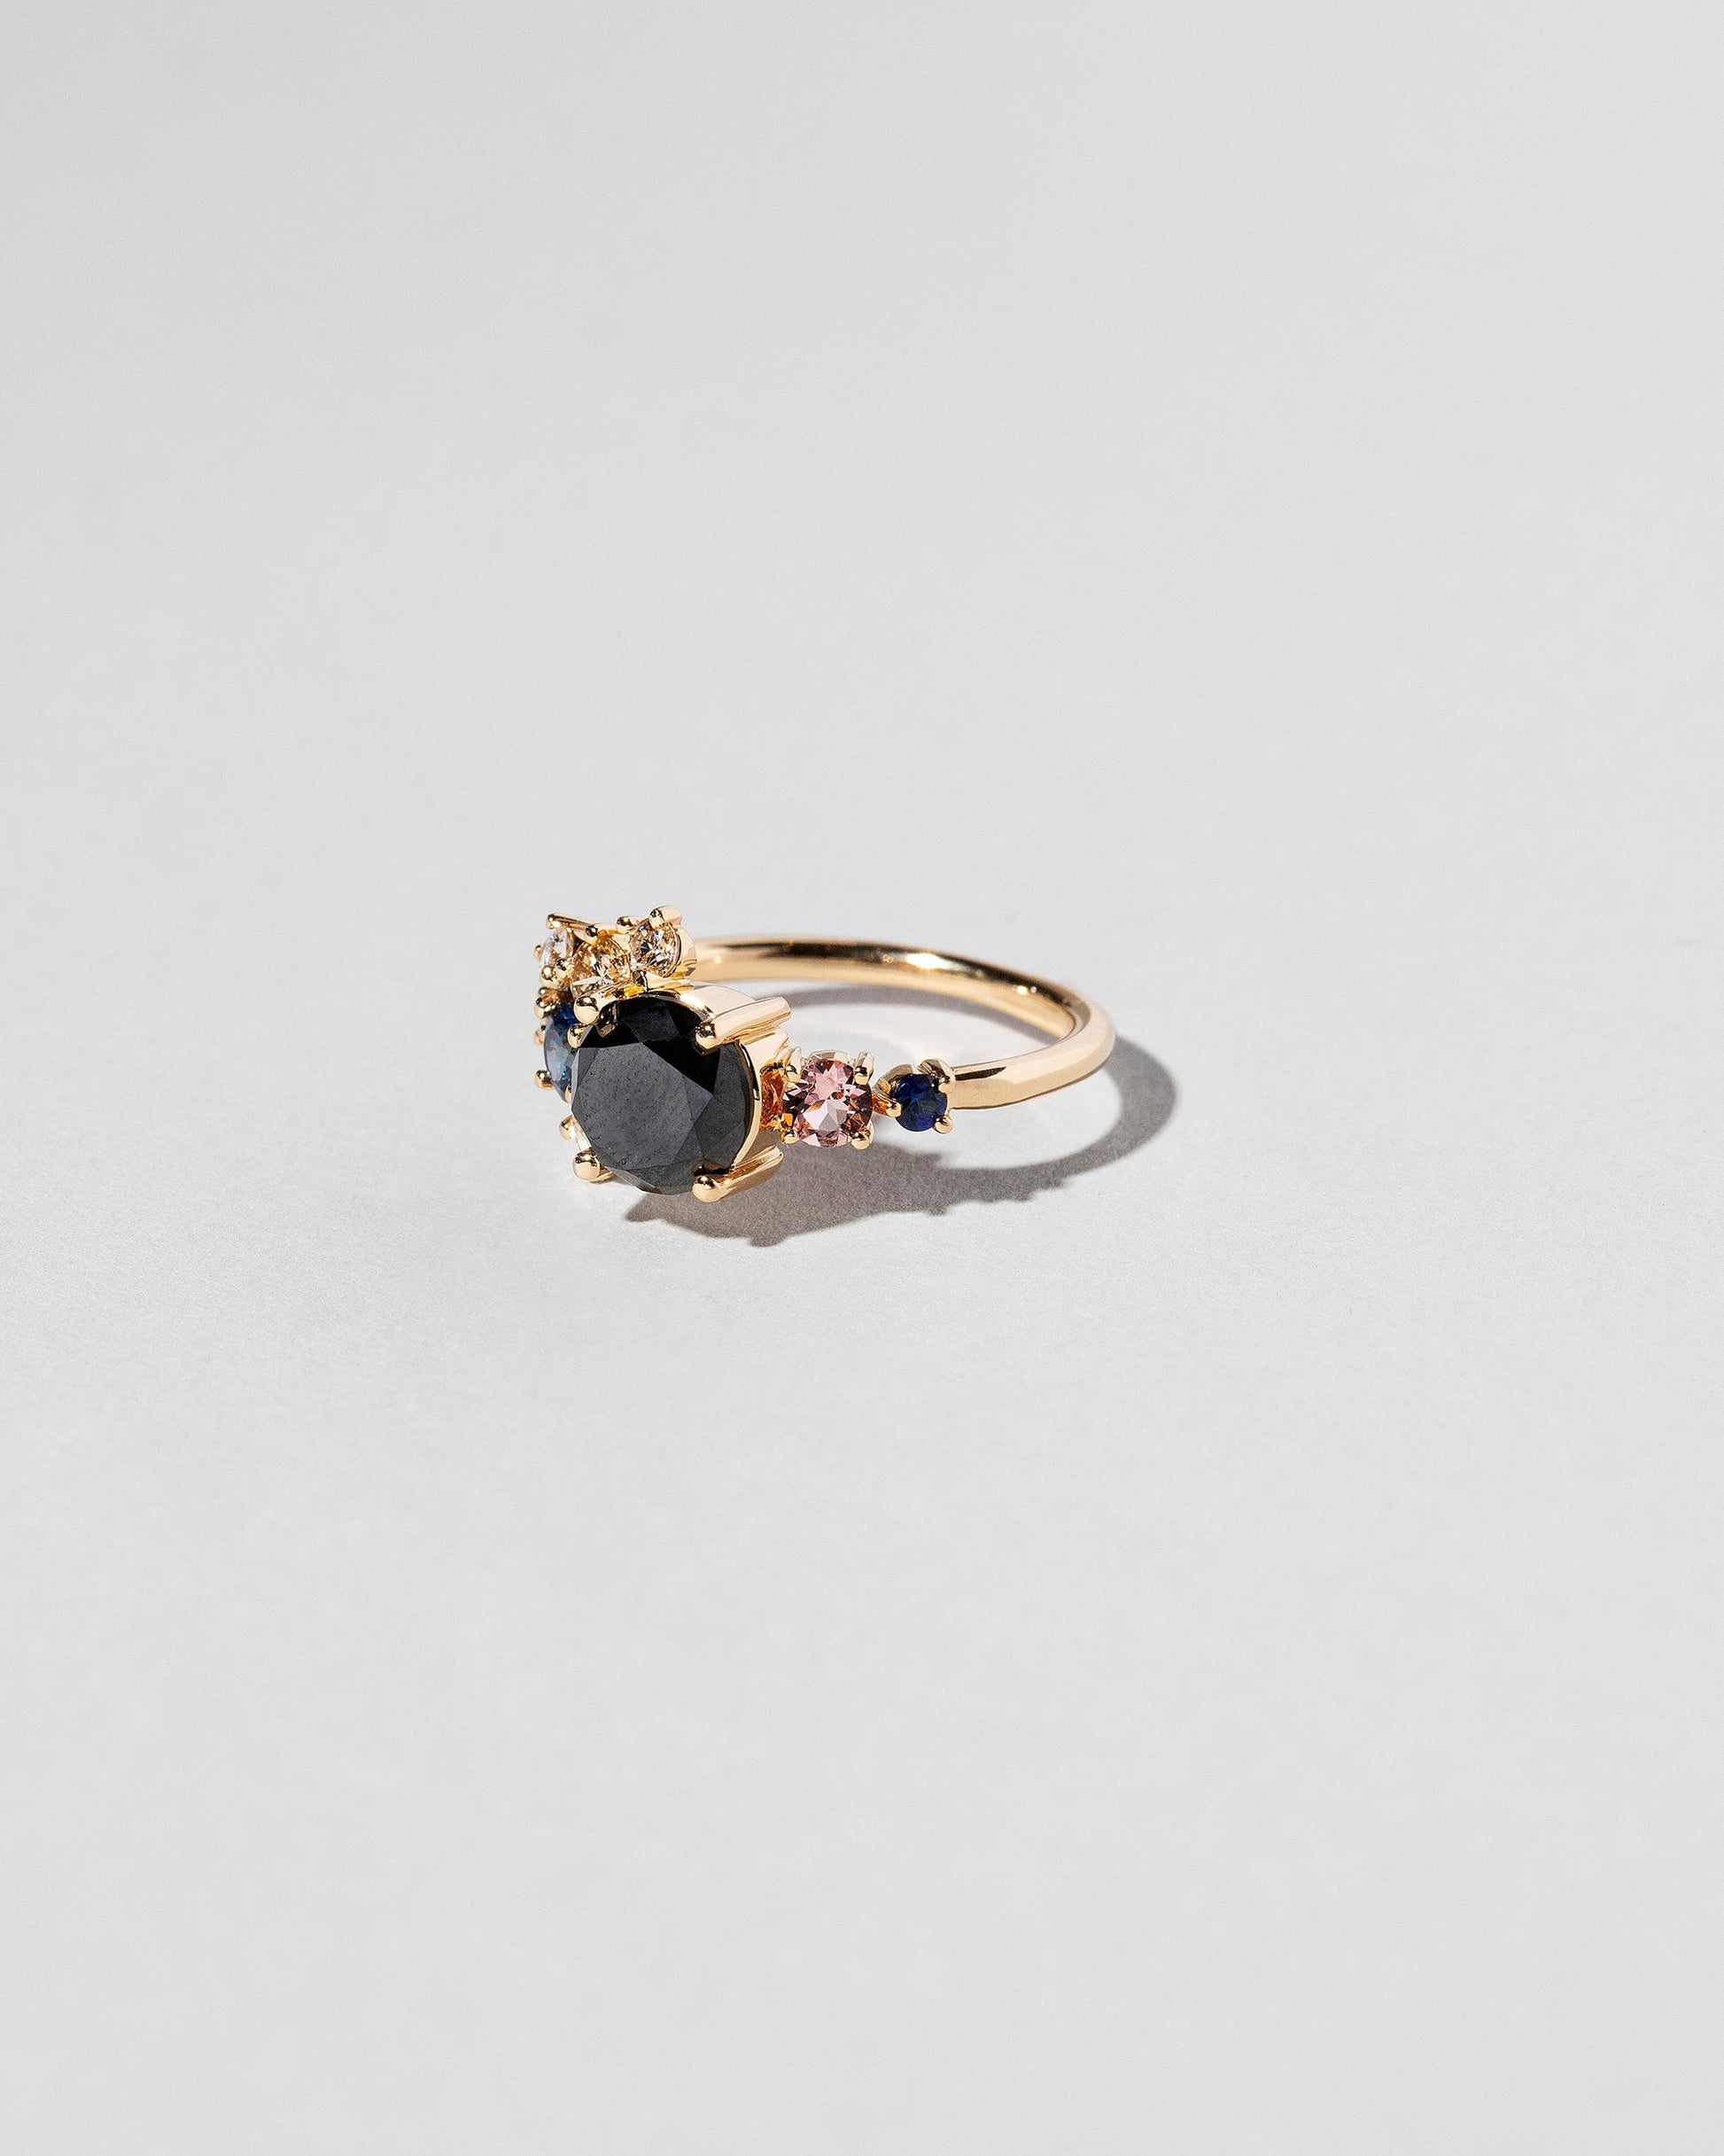  Vega Ring - Black Diamond on light color background.